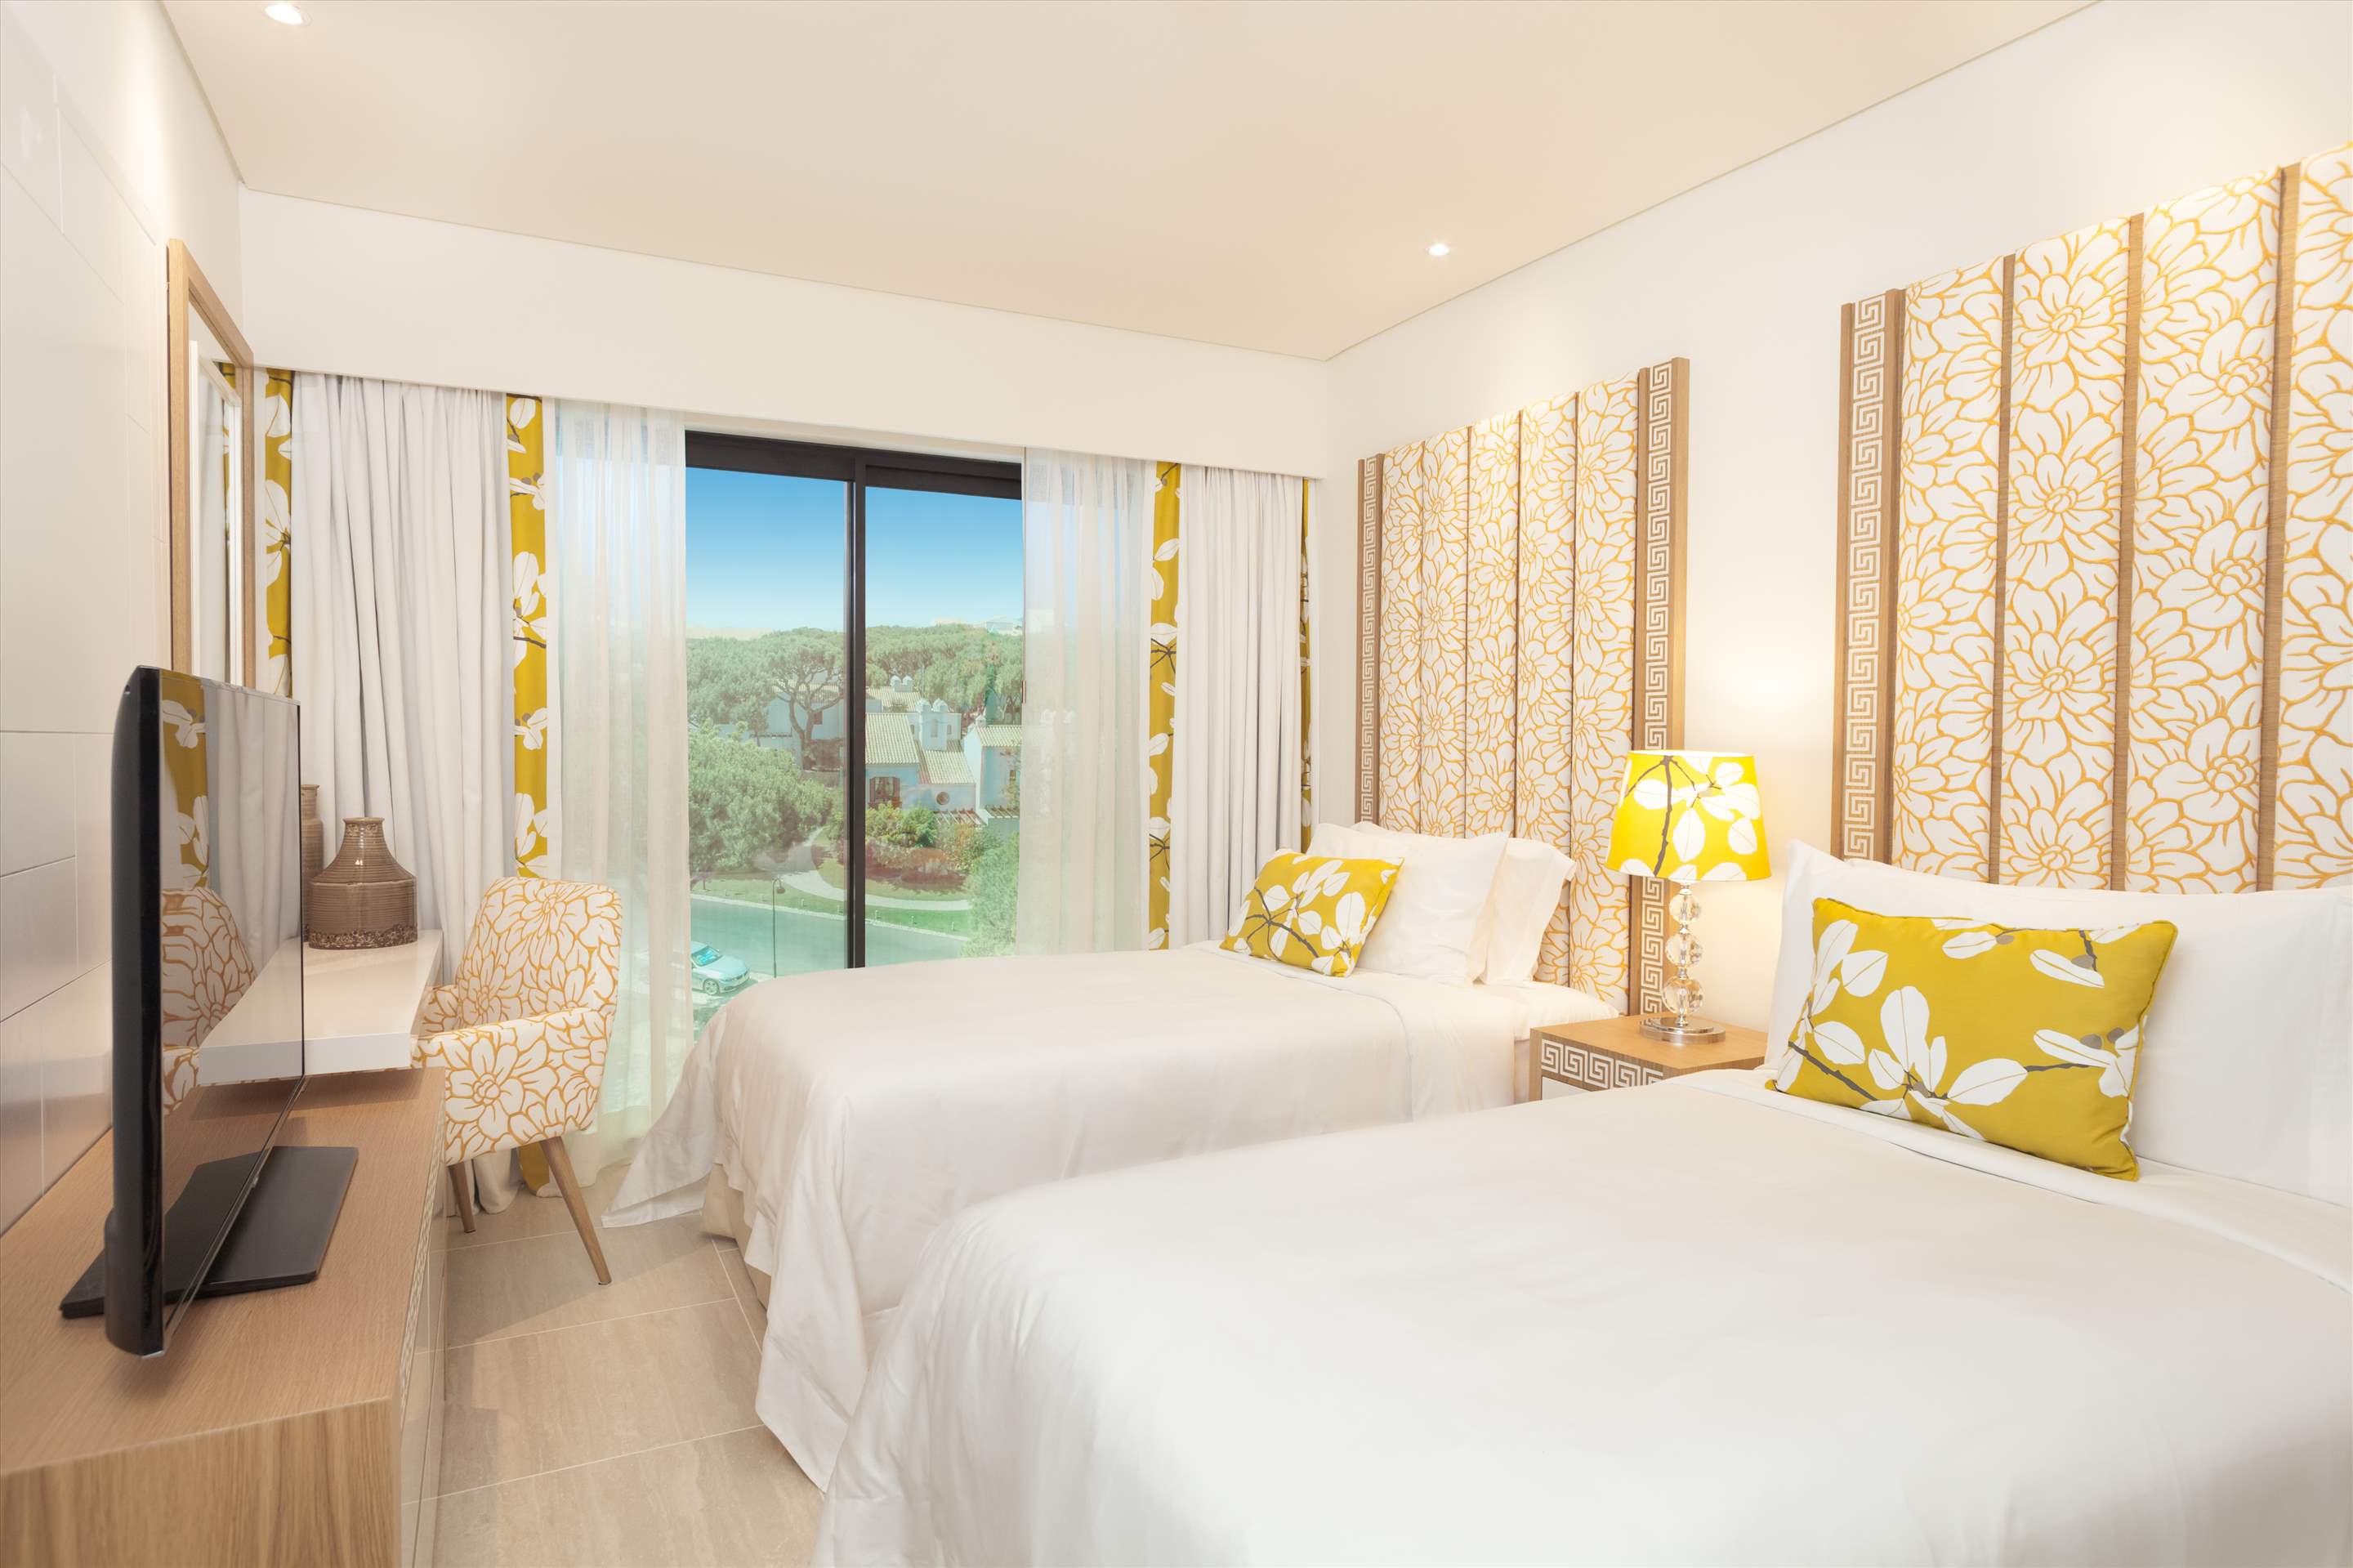 Pine Cliffs Gardens, Two Bedroom Suite, S/C Basis, 2 bedroom apartment in Pine Cliffs Resort, Algarve Photo #13